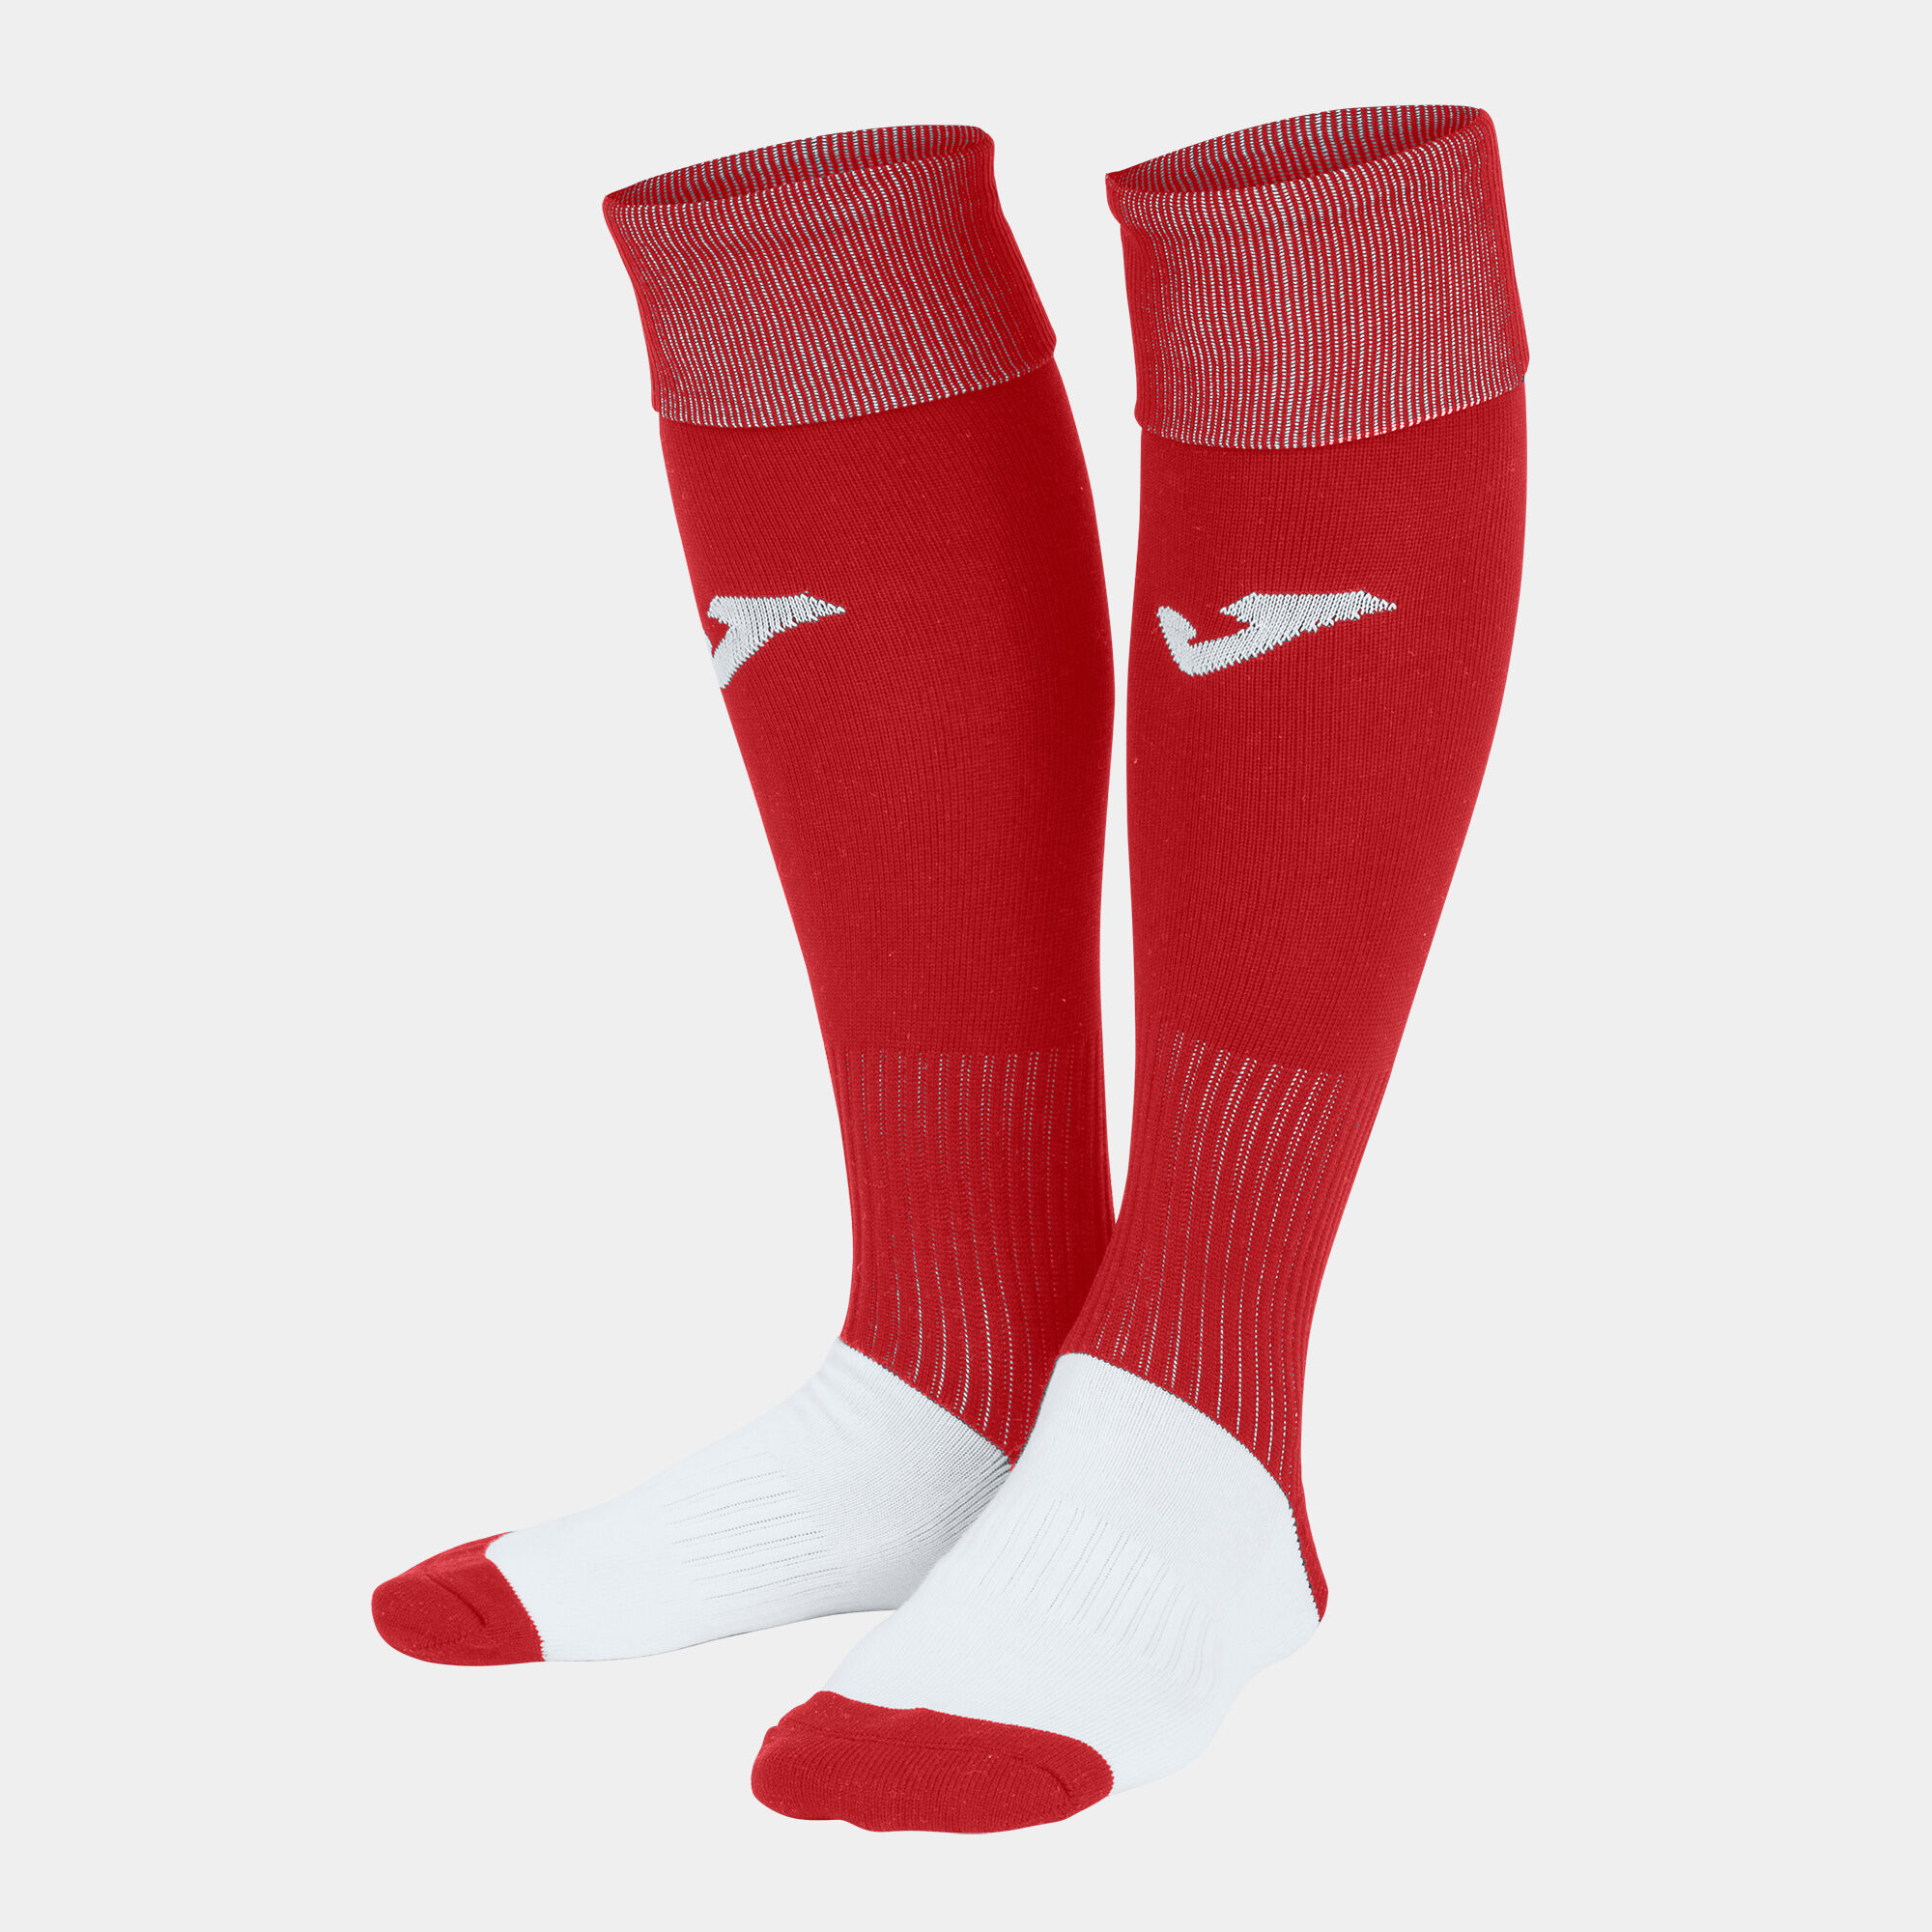 Colour Joma Classic II Football Socks Small Red Size 